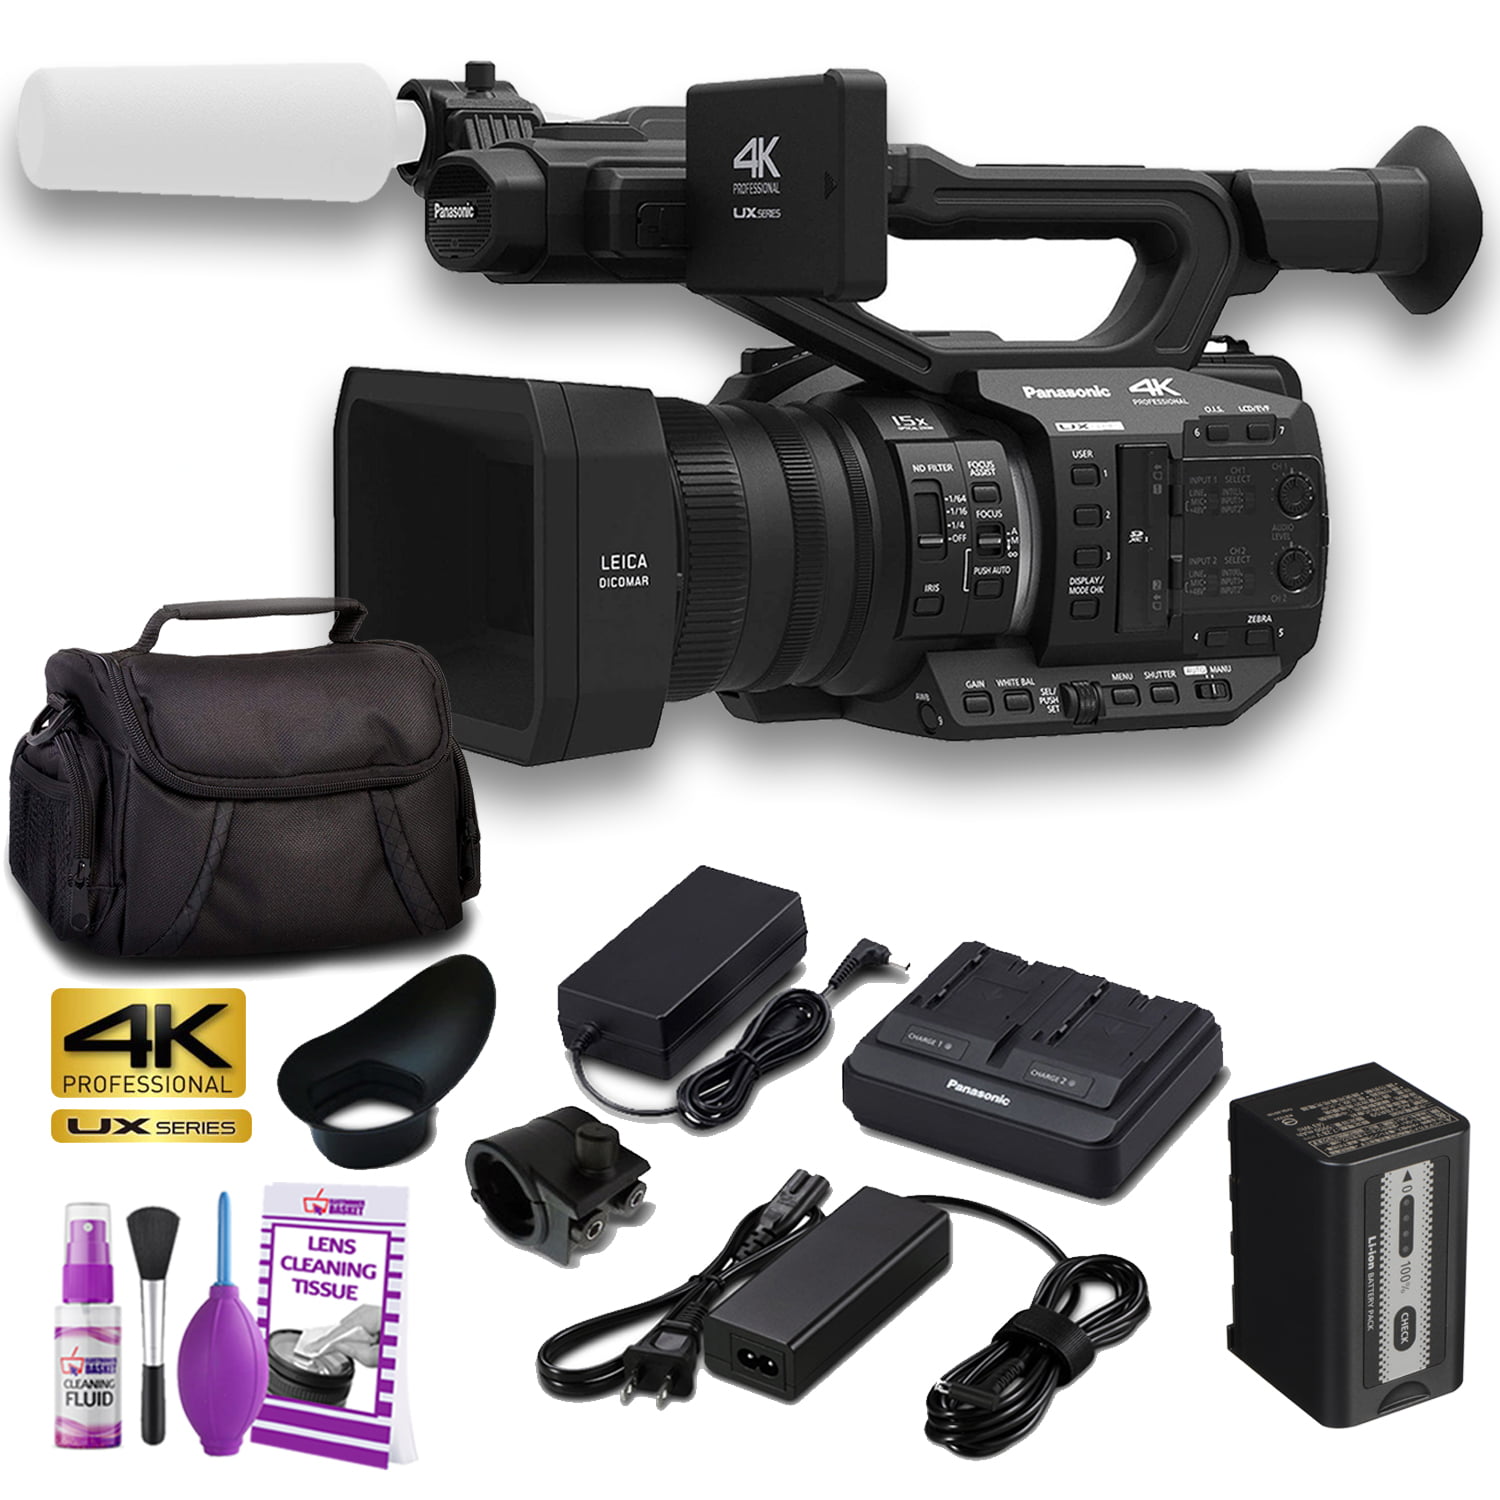 Large Digital Camera NX2000 Galaxy NX Video Padded Carrying Bag Case for Samsung NX300